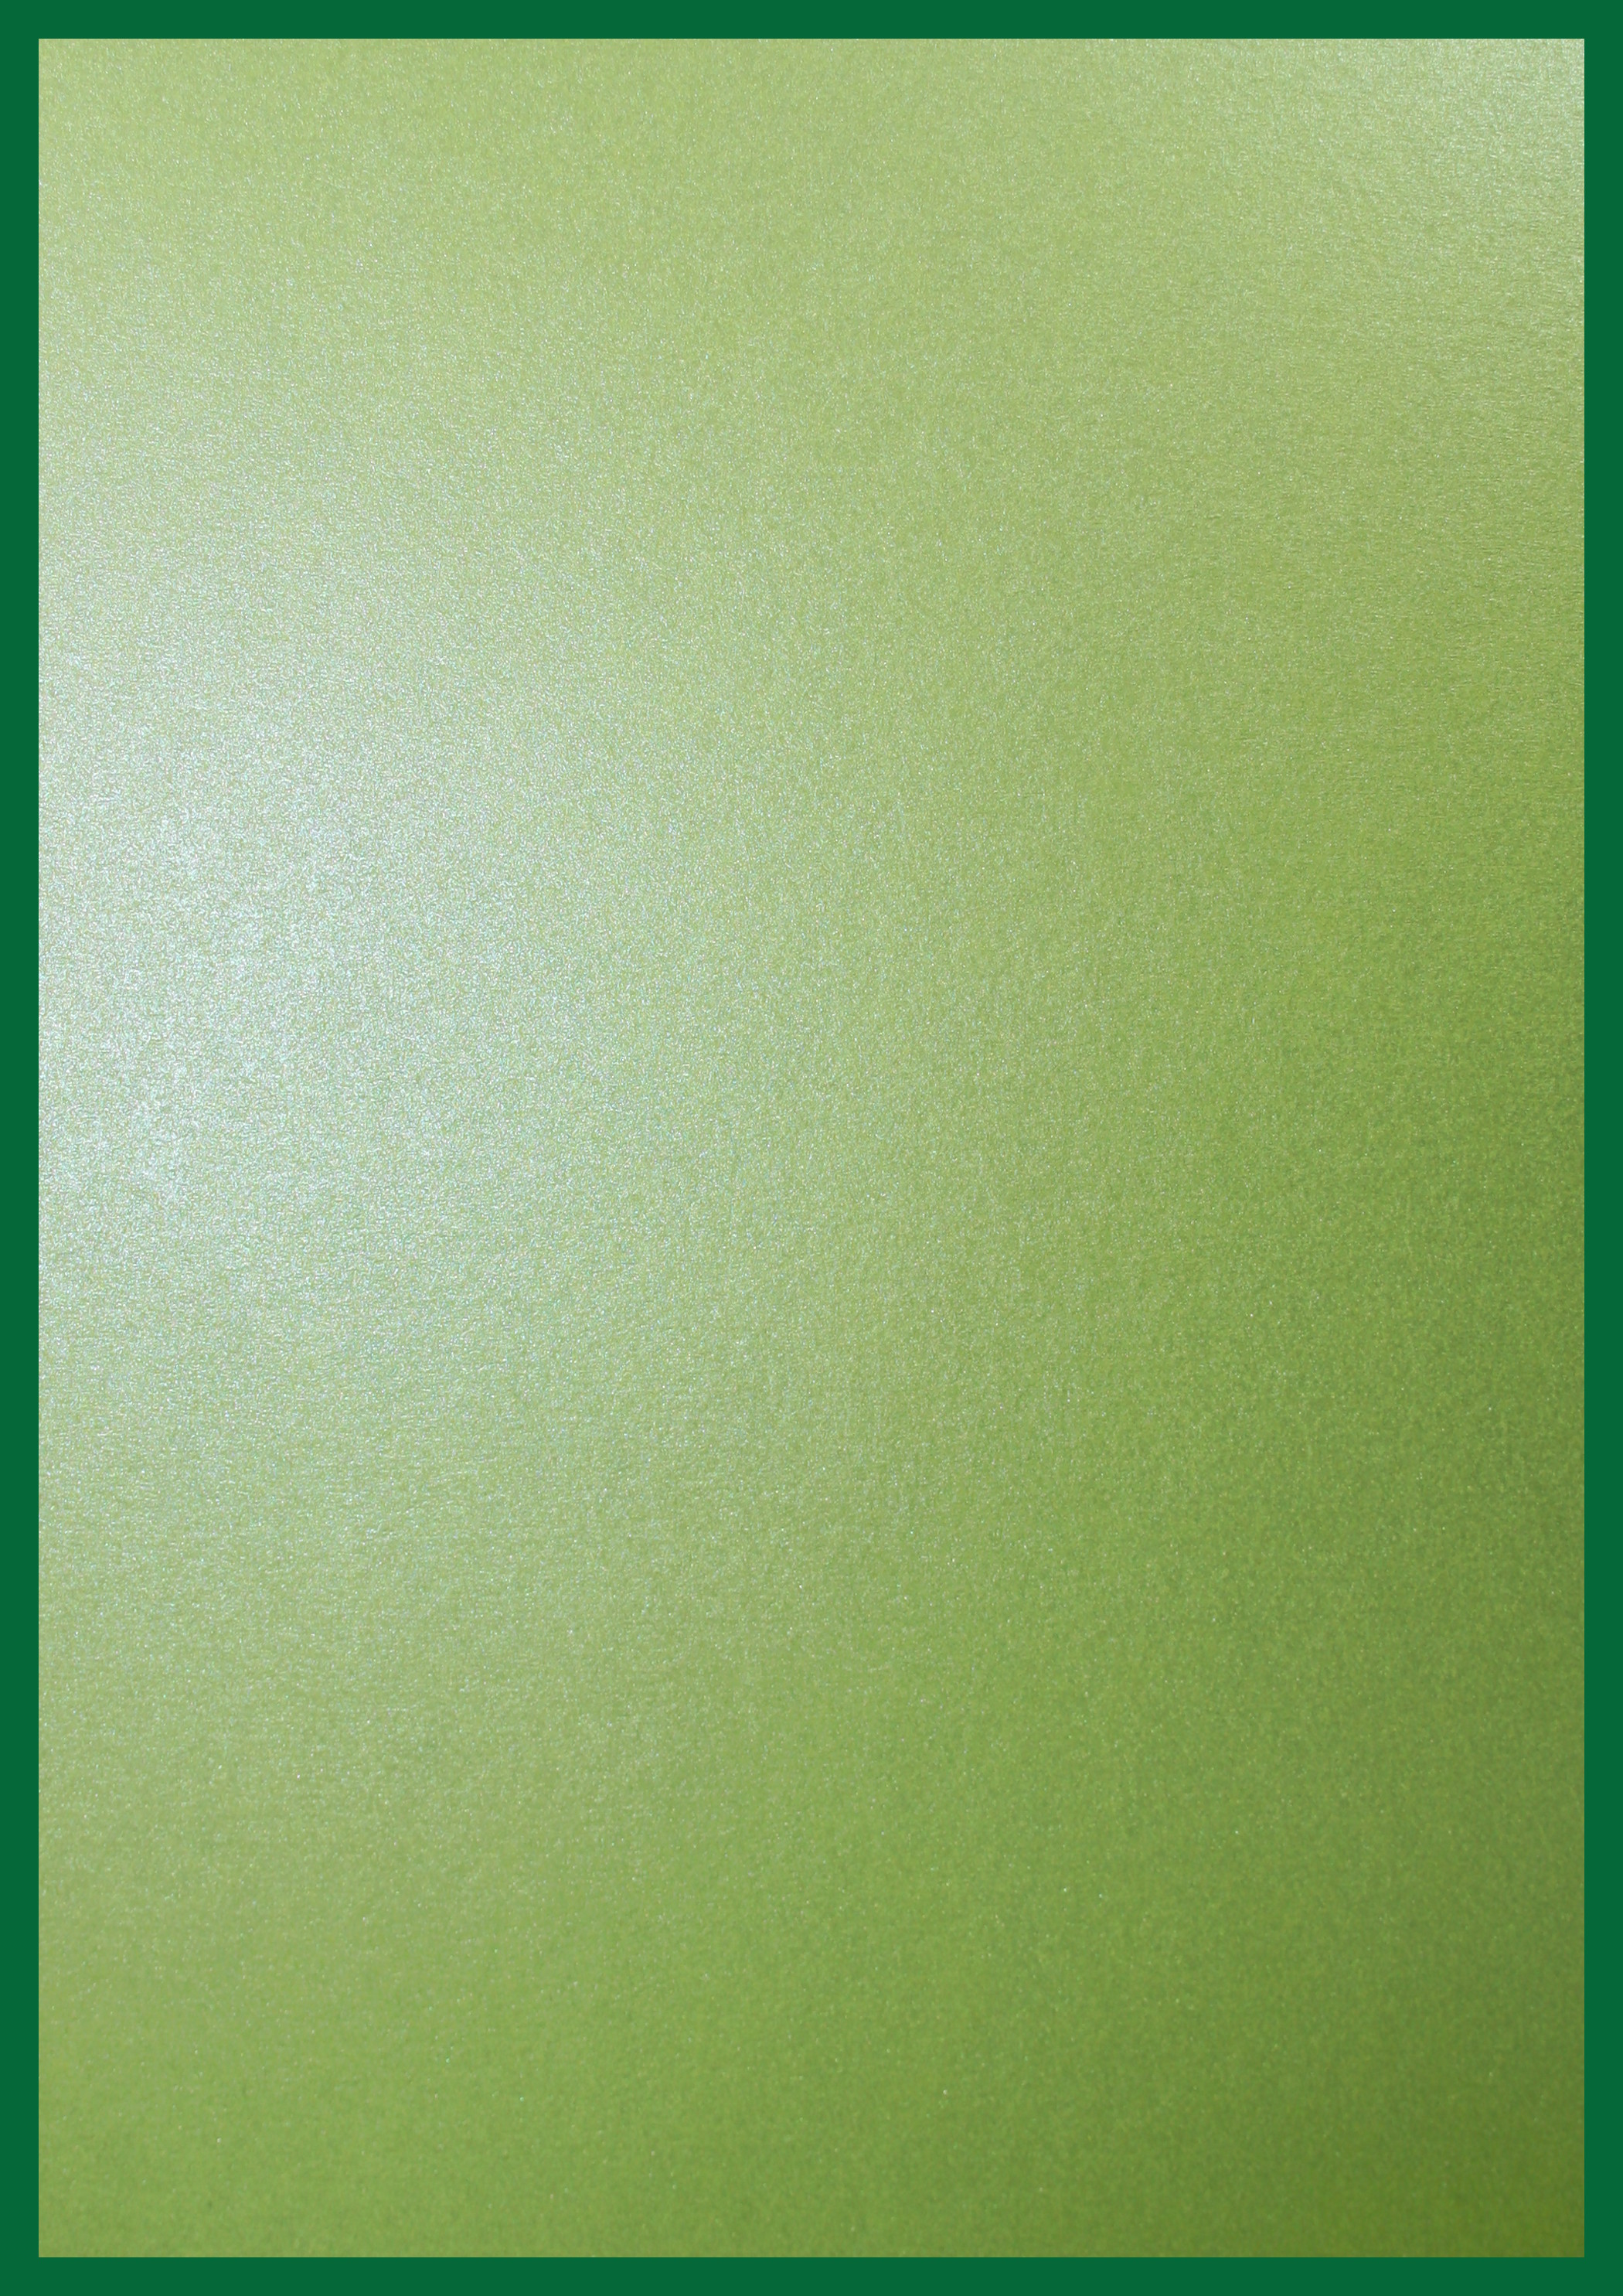 Pearlescent Card – Olive Green 270gsm | A5, A4, A3, A2 | WL Coller Ltd